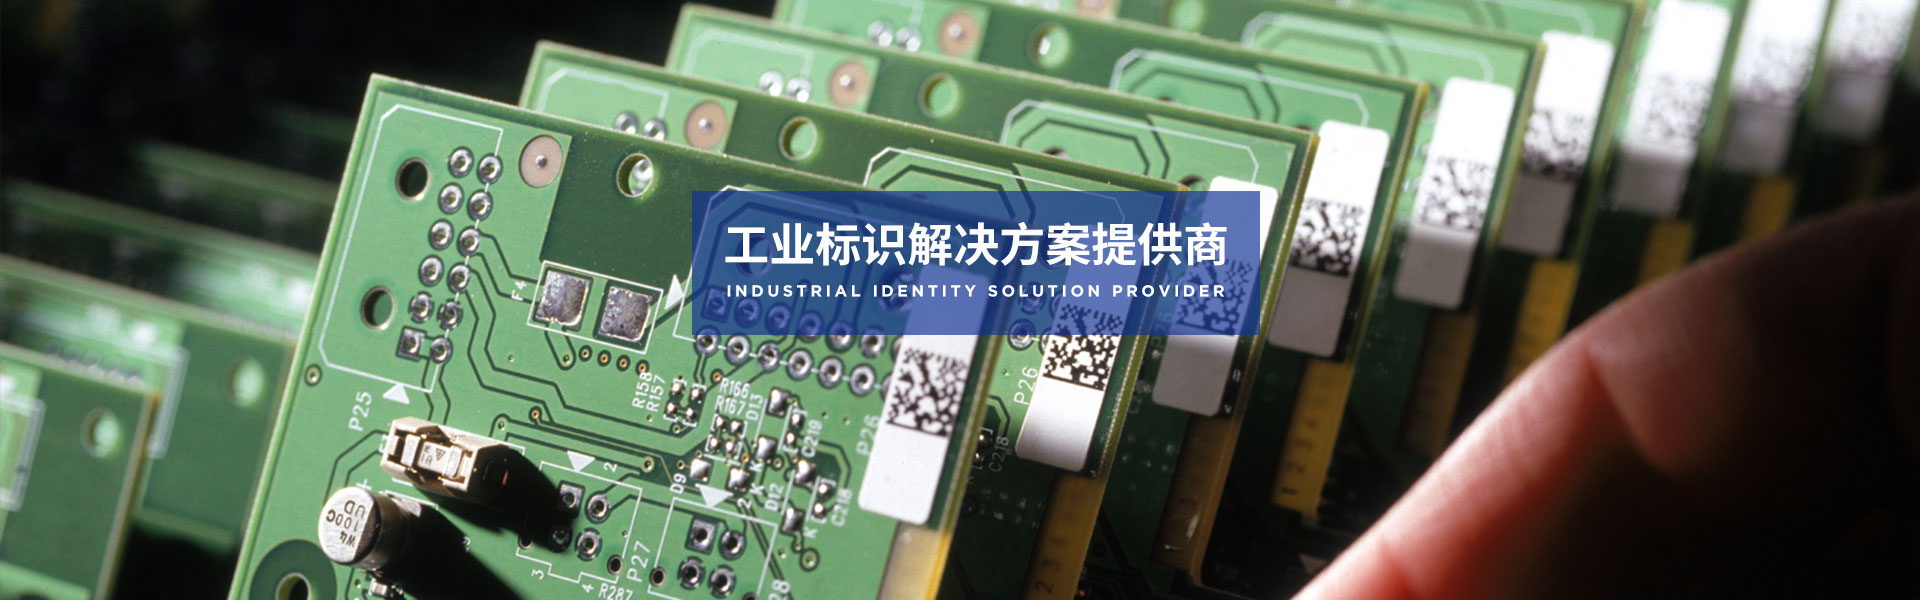 Industrial identification